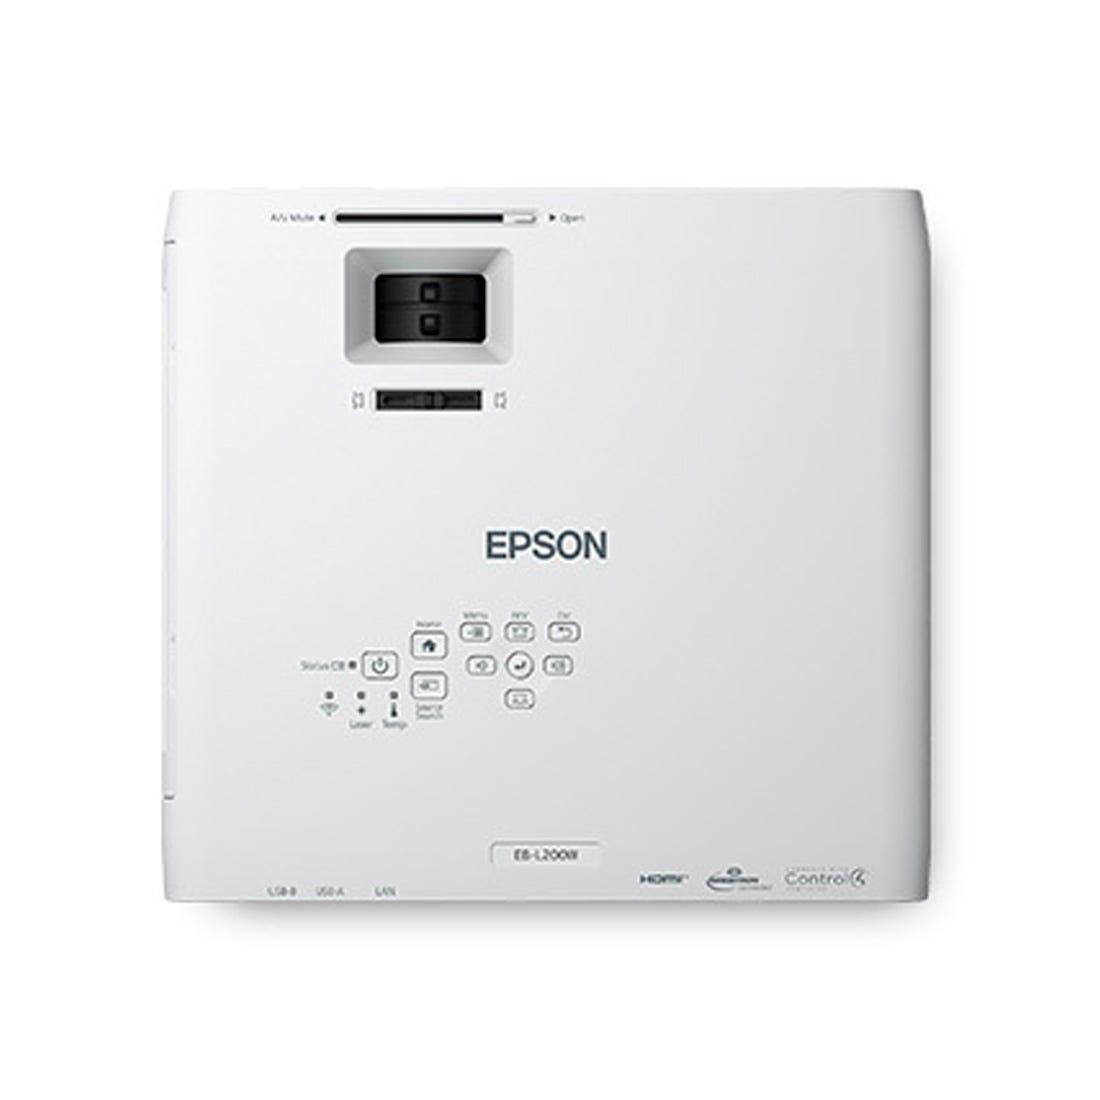 Projetor Epson Powerlite L200w 4200 lumens WXGA - V11H991020 - Mega Market